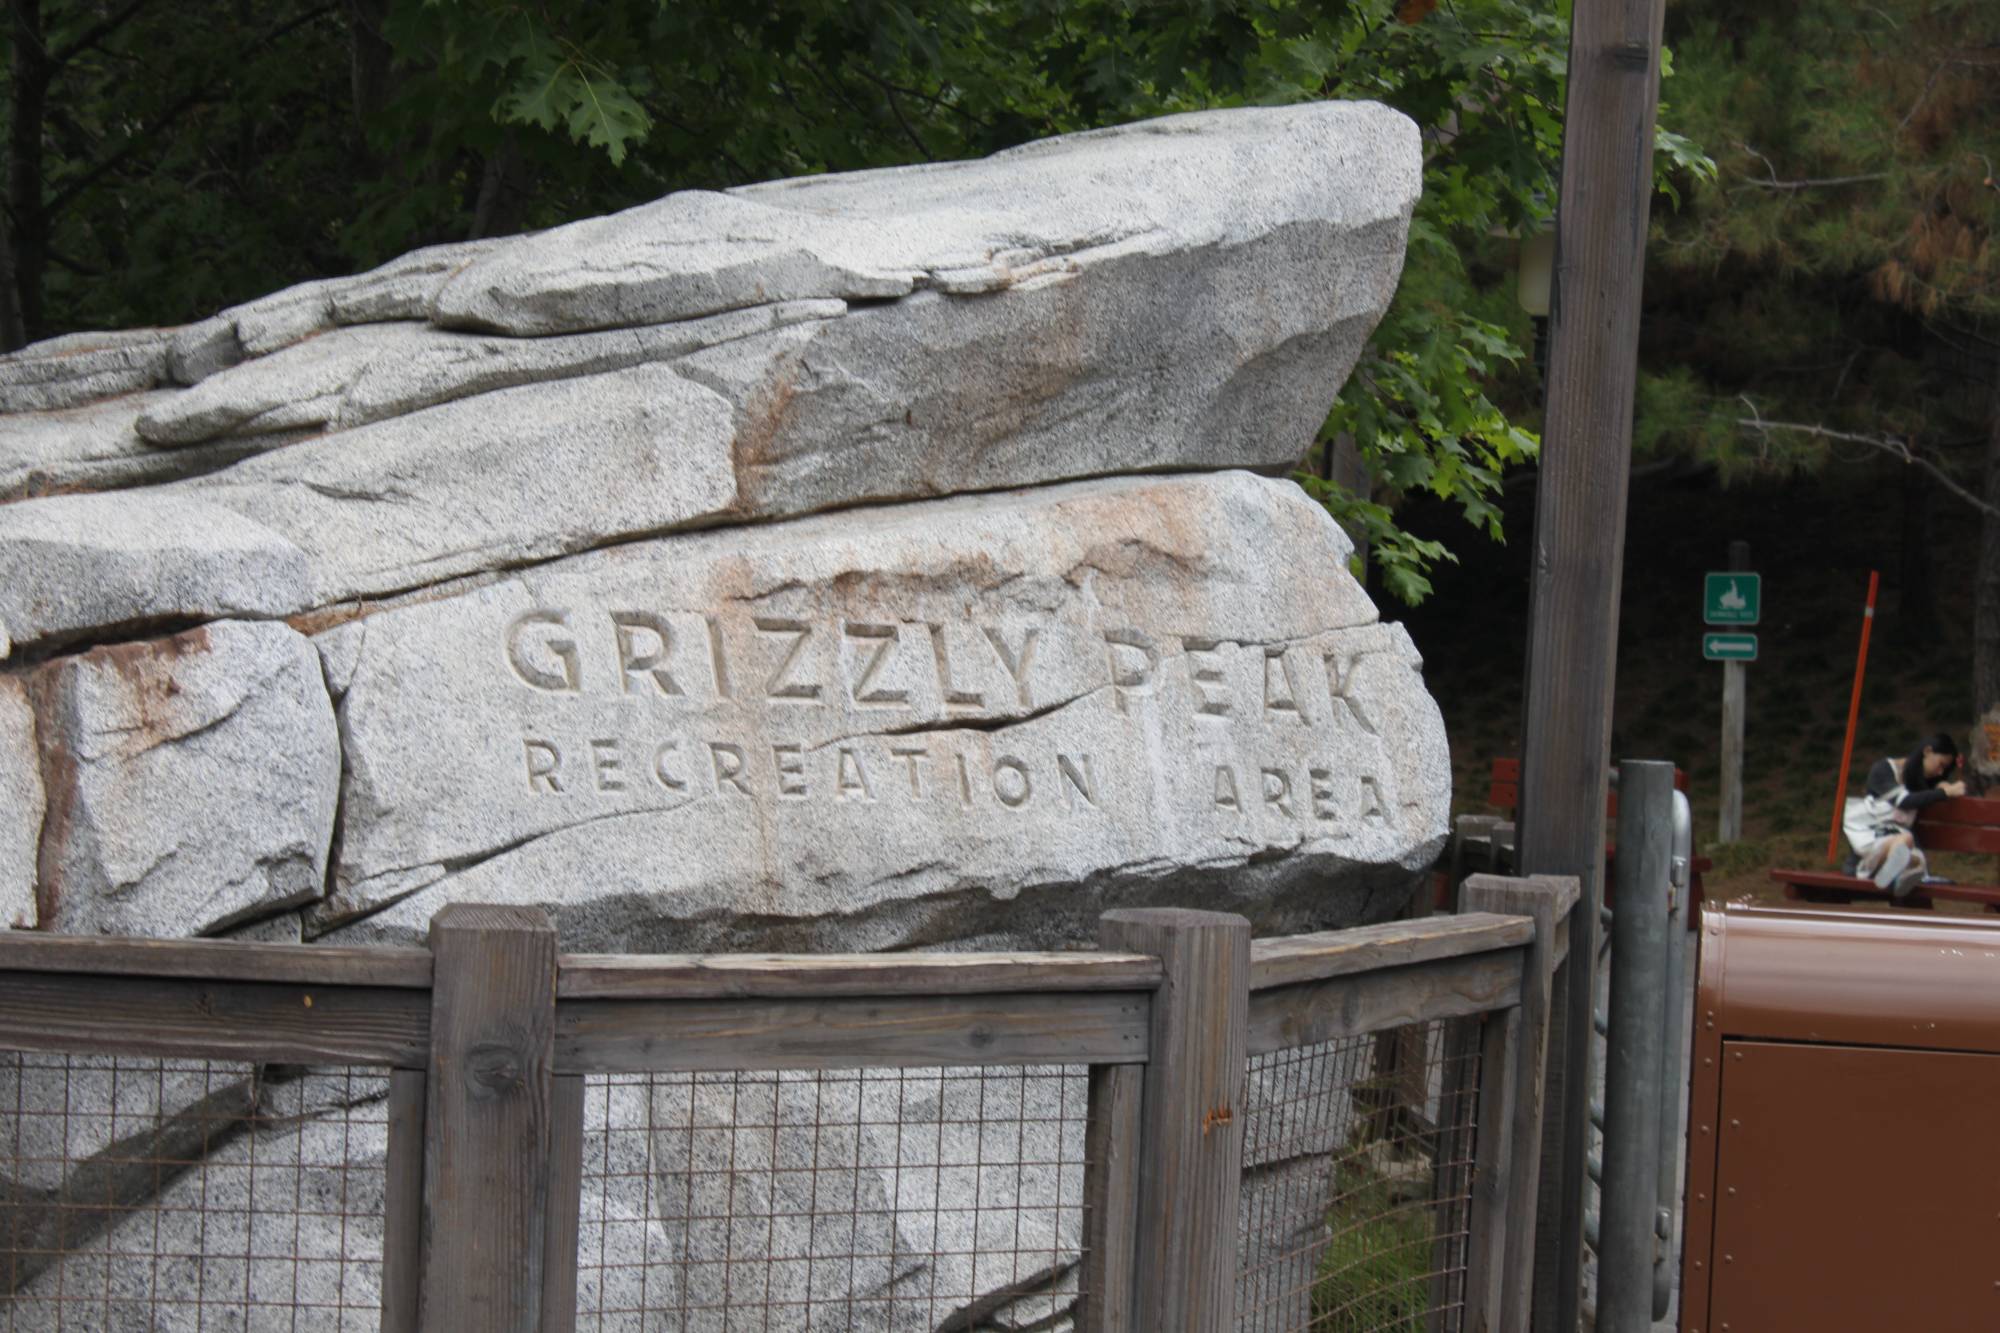 Disney California Adventure - Grizzly Peak Recreation Area sign